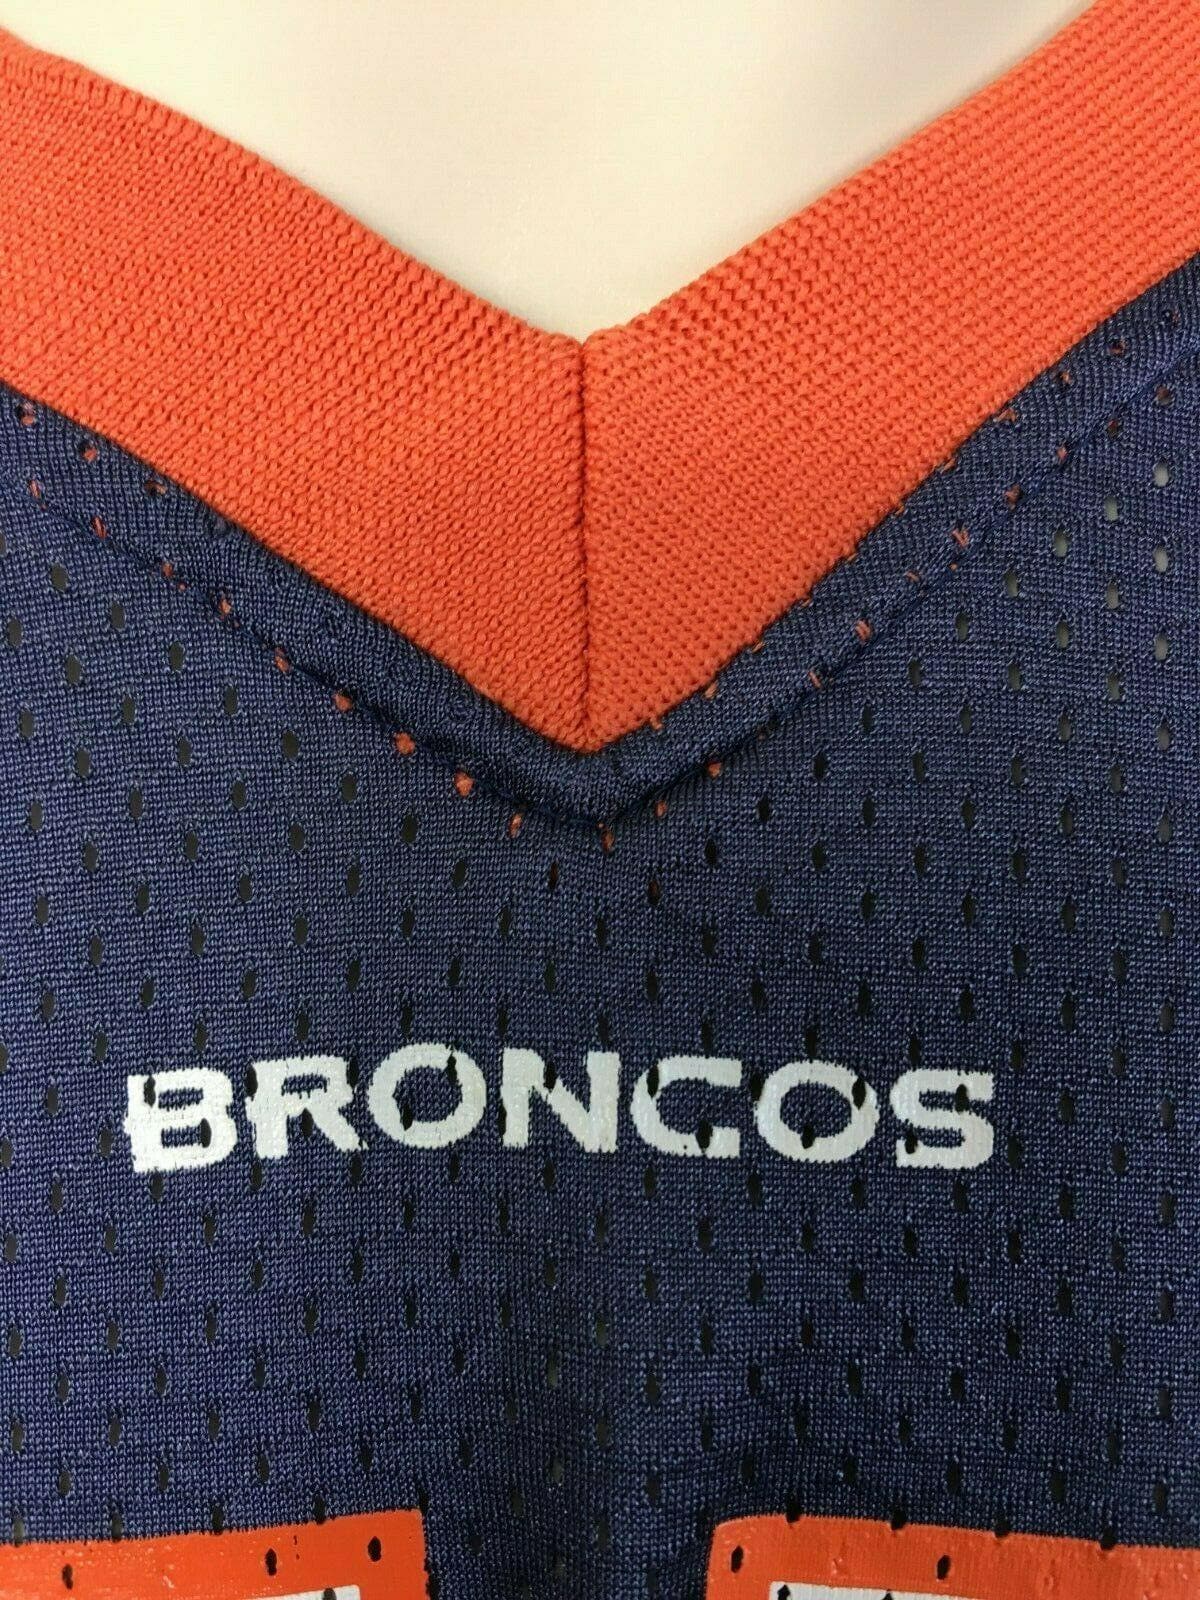 NFL Denver Broncos Bill Romanowski #53 Adidas Jersey Youth X-Large 18-20